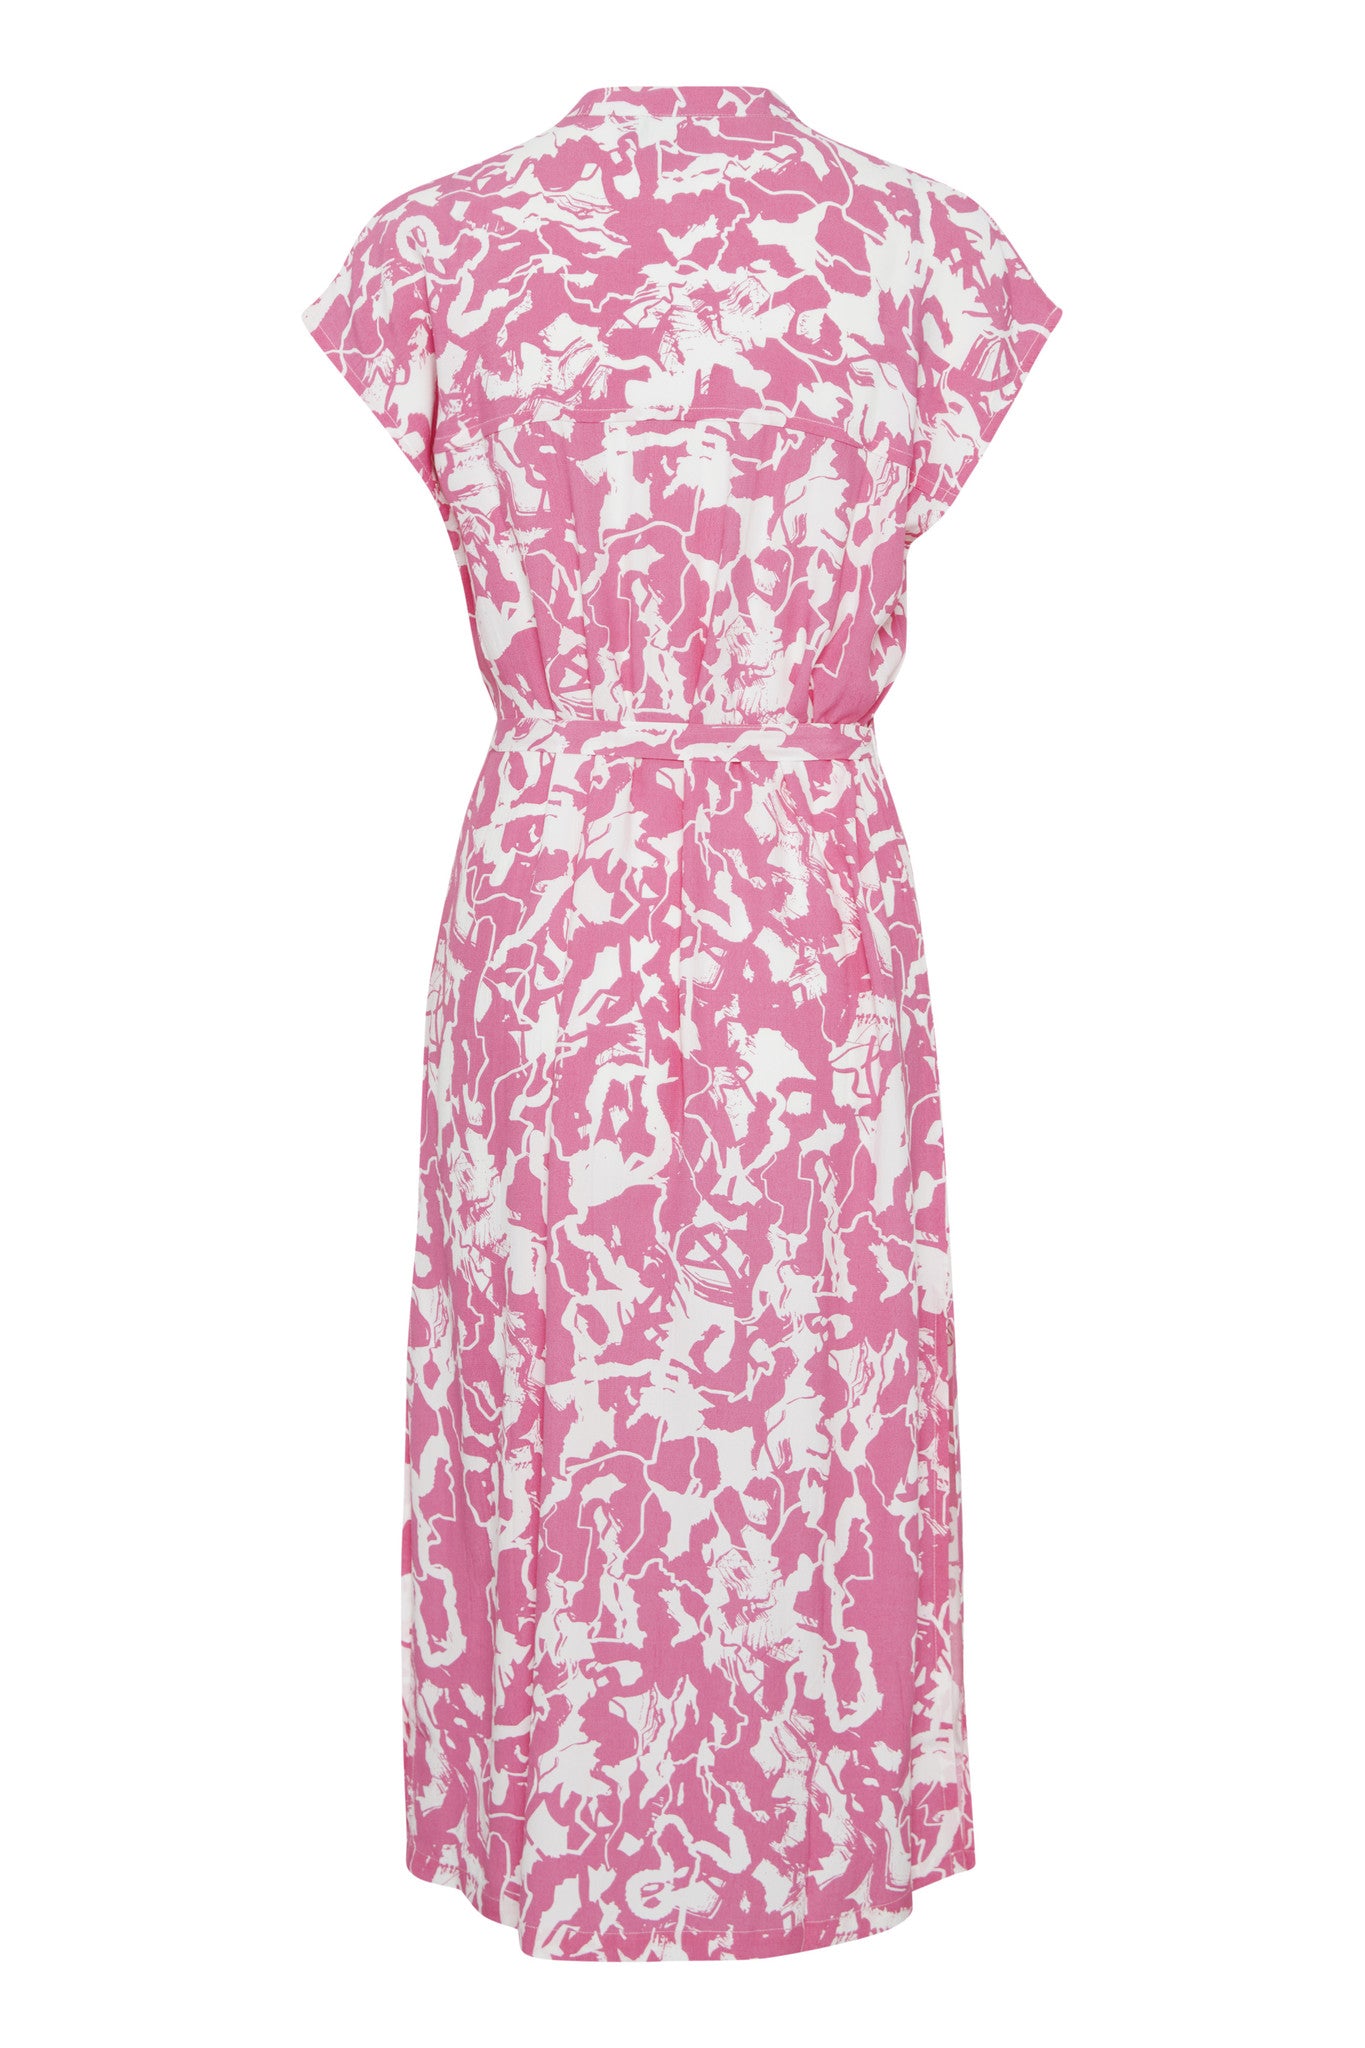 Regine - Dress - Super Pink